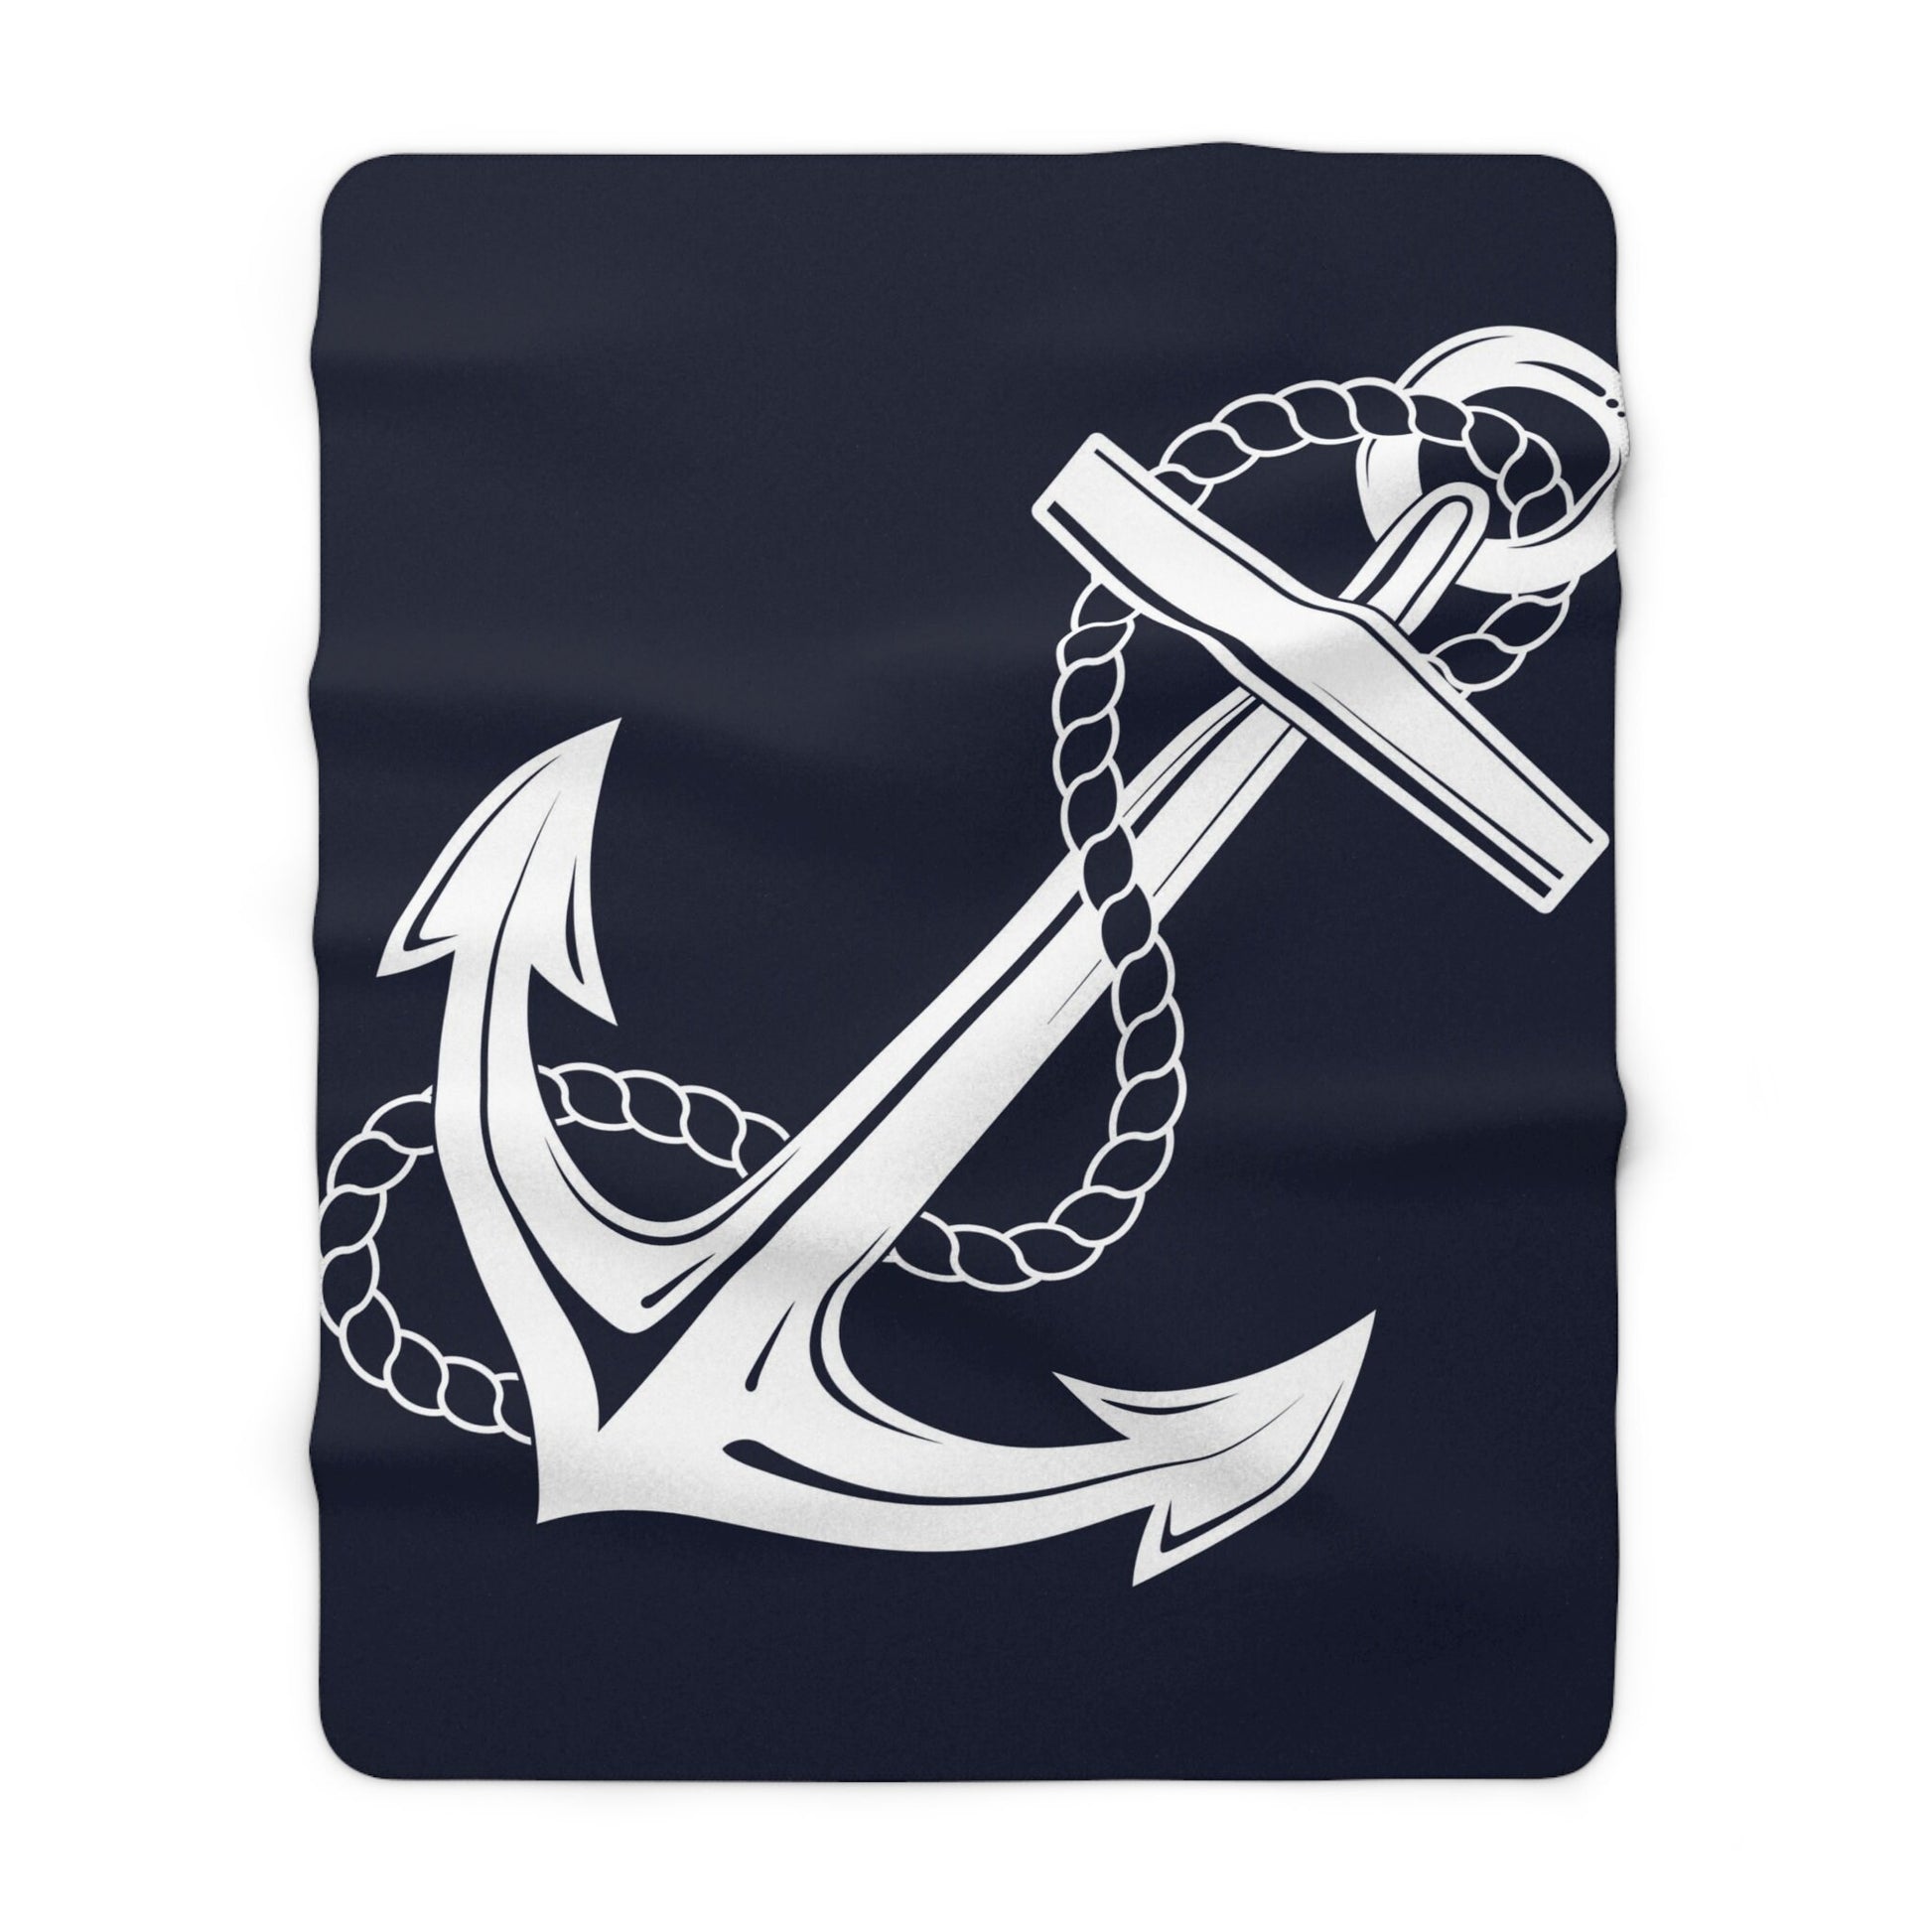 Anchor blanket nautical decor navy white anchors boating blanket sherpa minky throw blanket